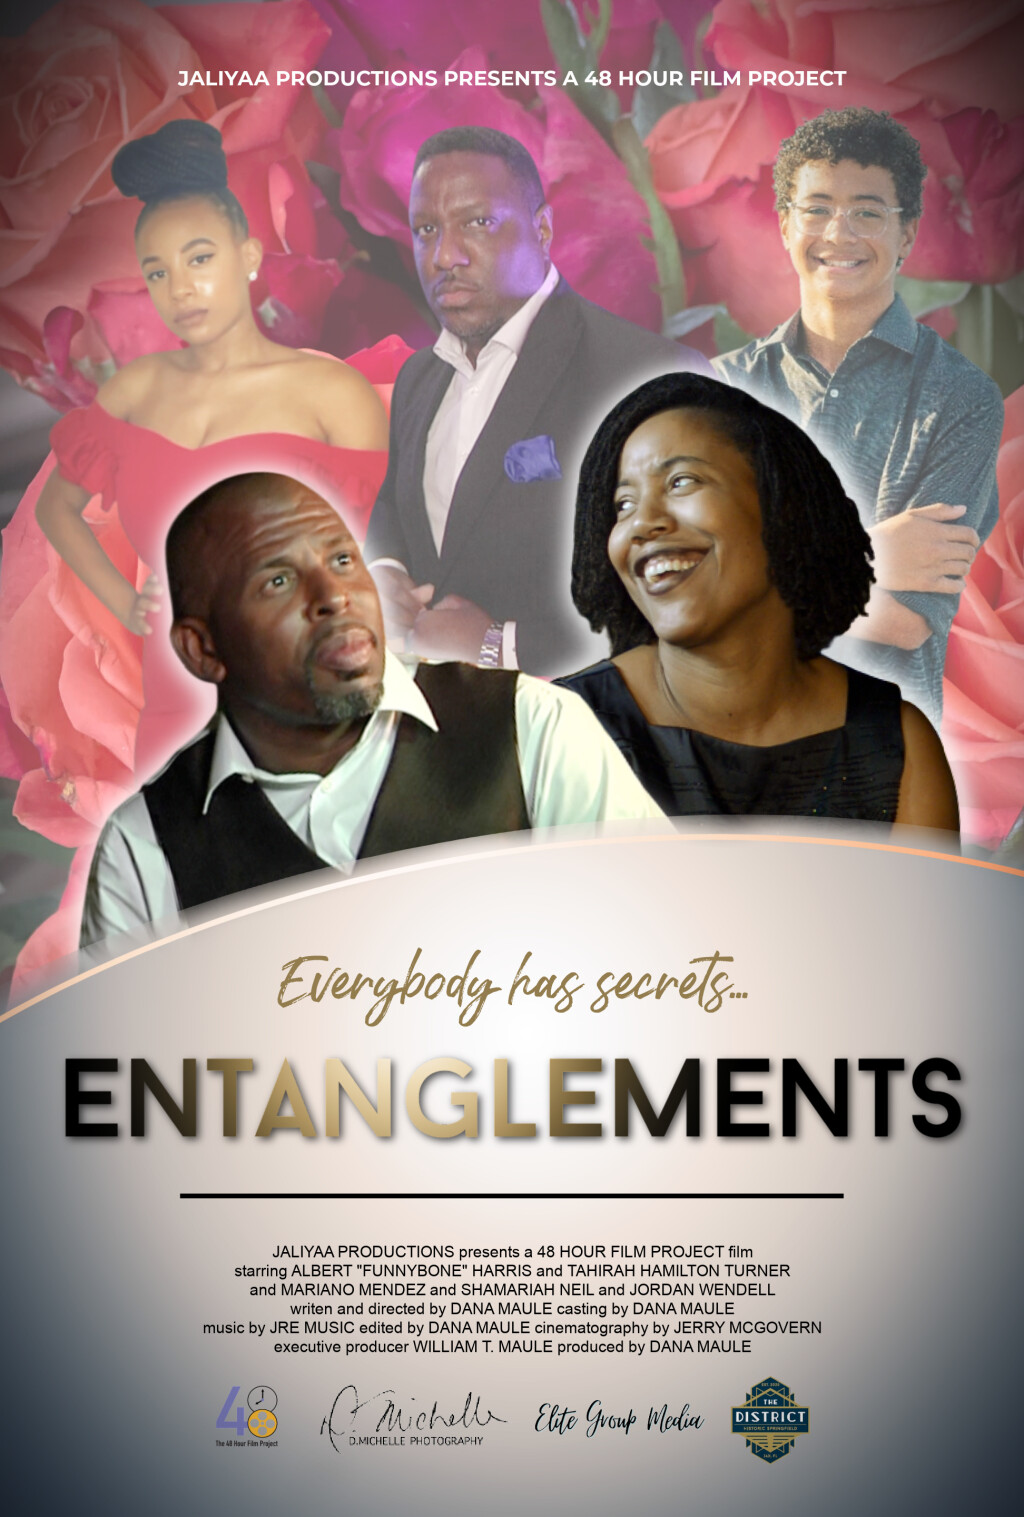 Filmposter for Entanglements